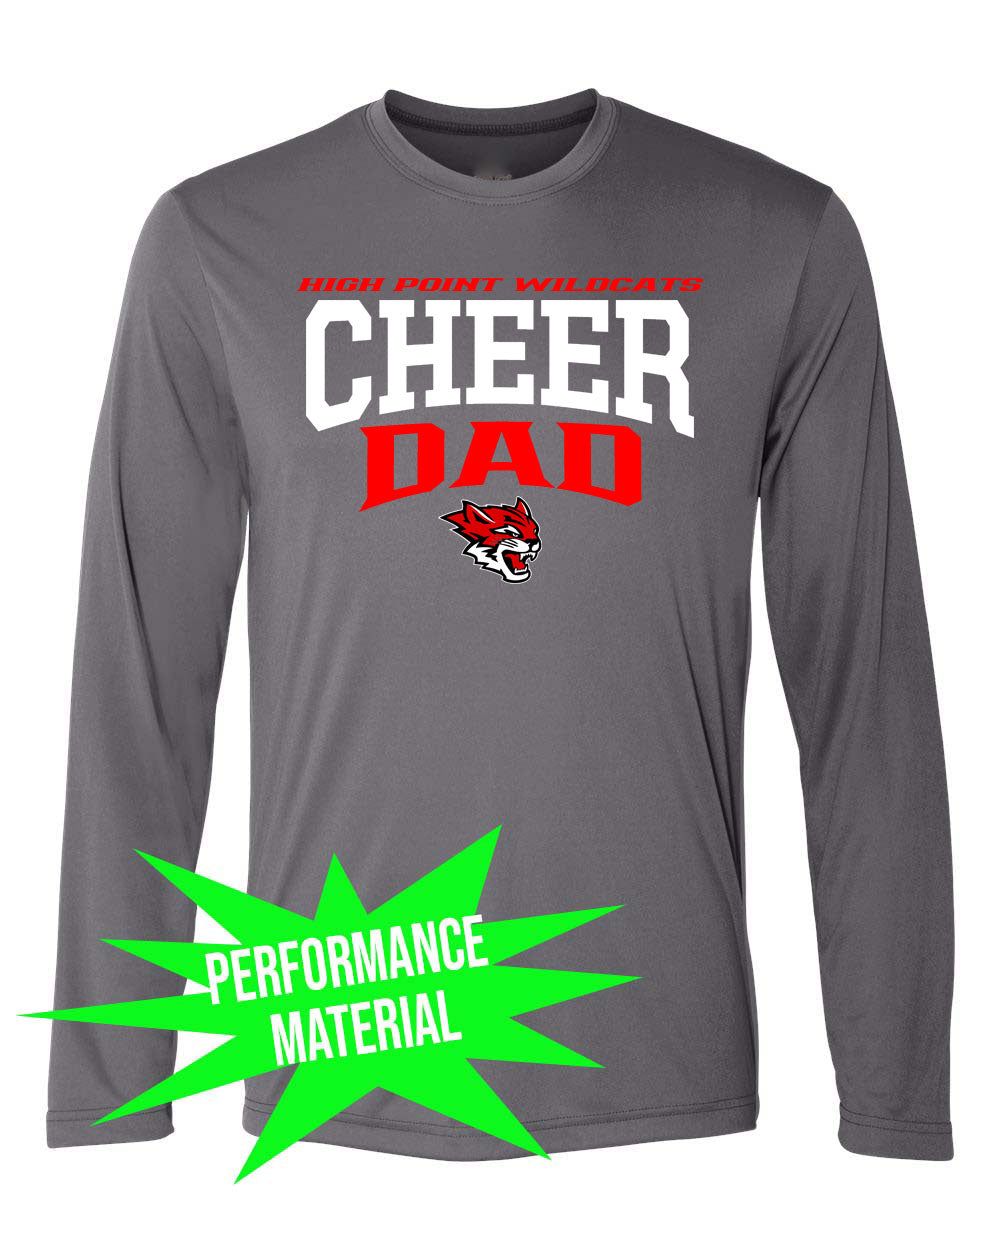 Wildcats Cheer Performance Material Design 6 Long Sleeve Shirt